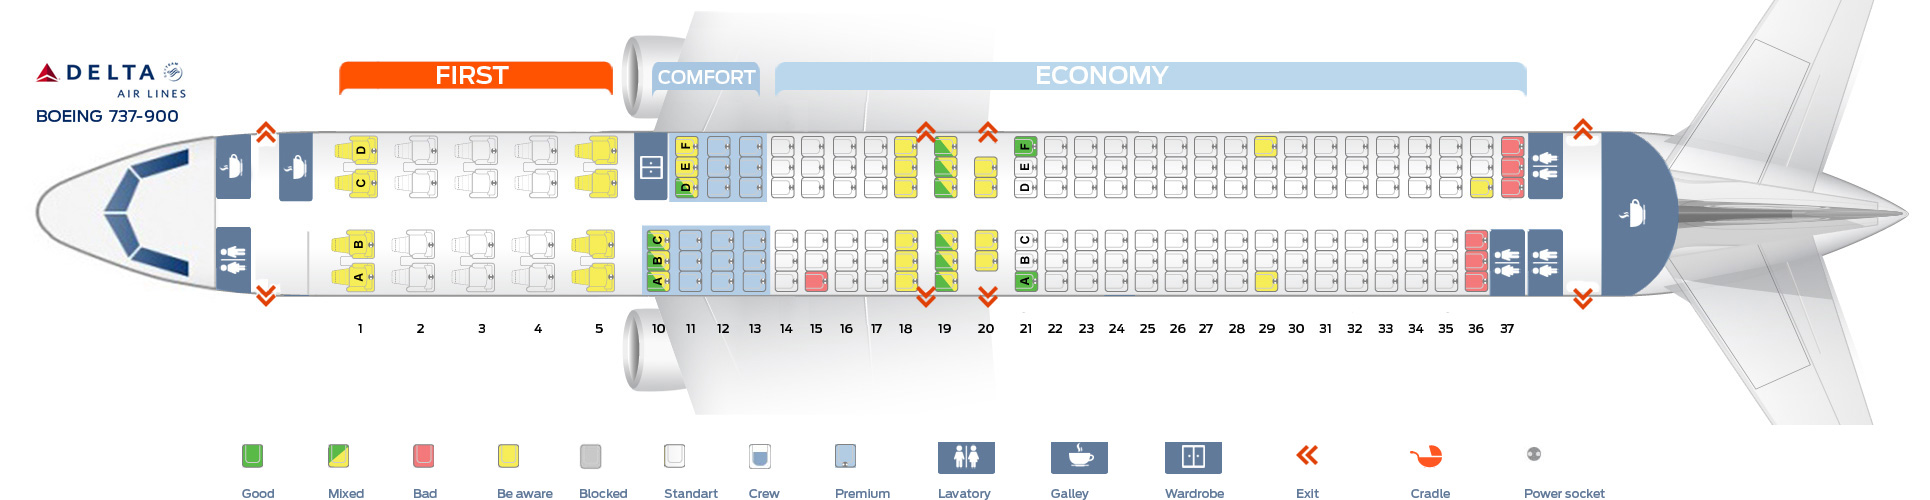 Delta Plane Seating Chart